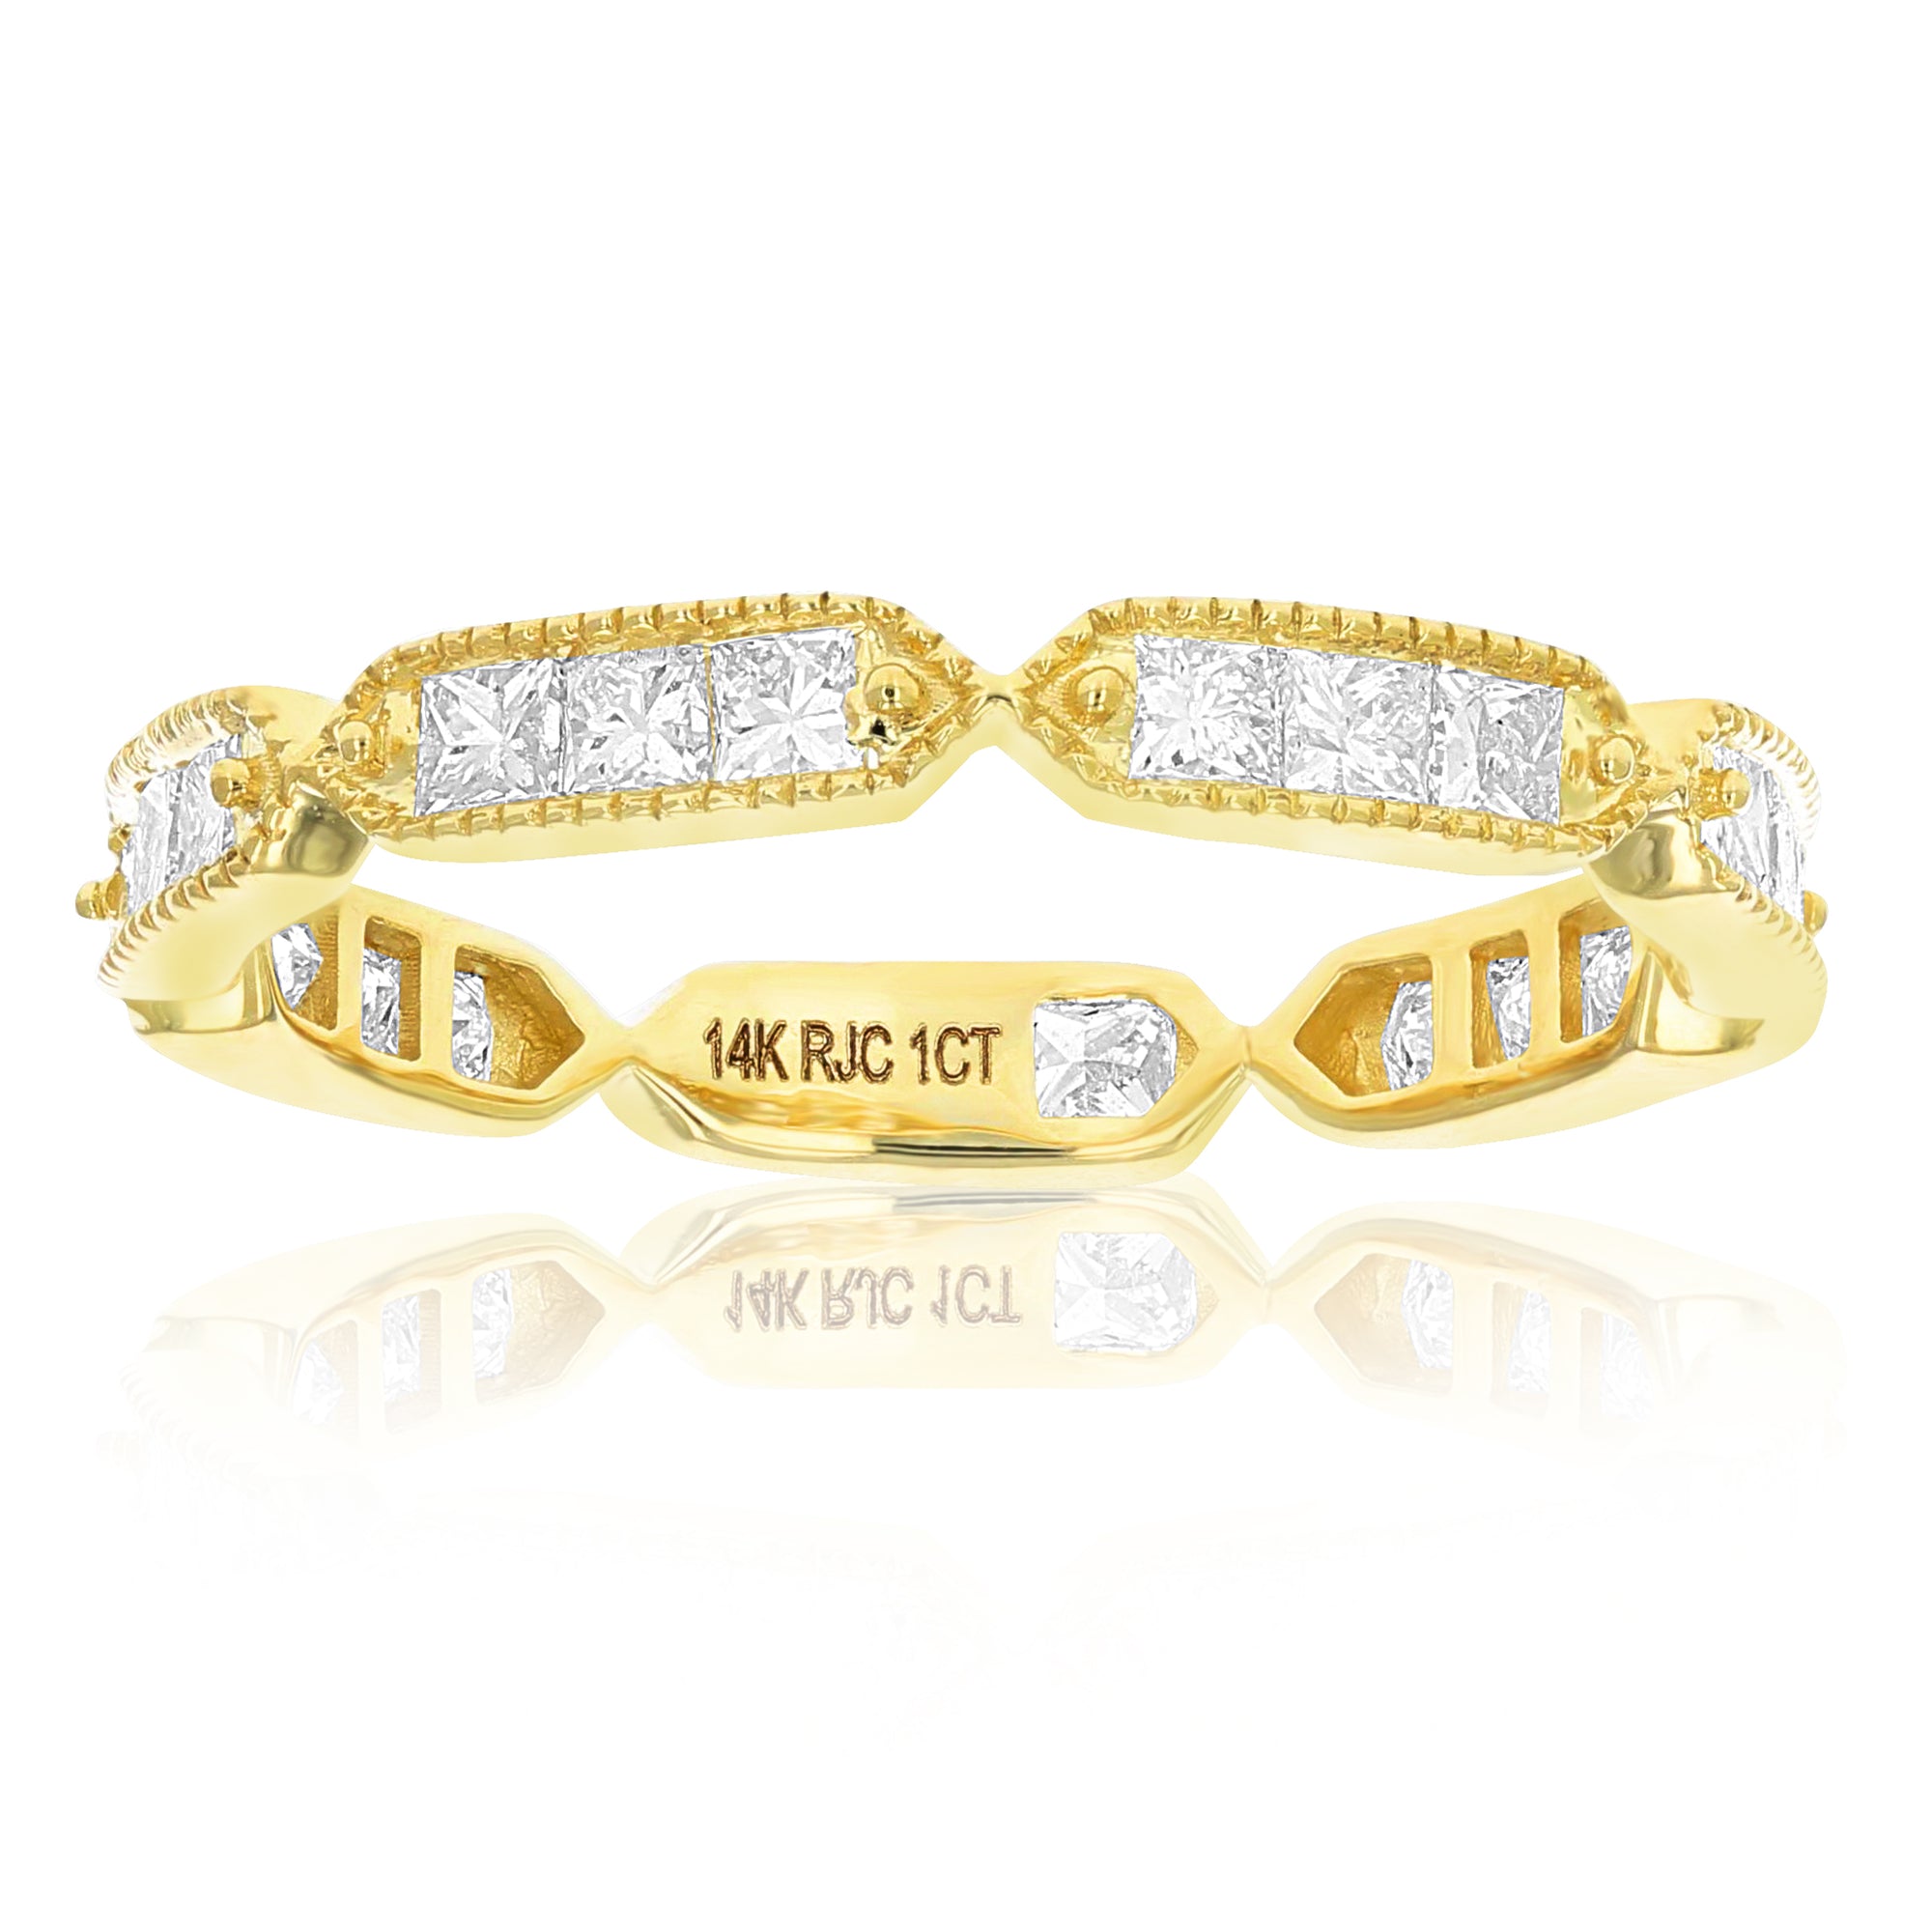 1 cttw Princess Diamond Eternity Ring Wedding Band with Milgrain 14K Yellow Gold